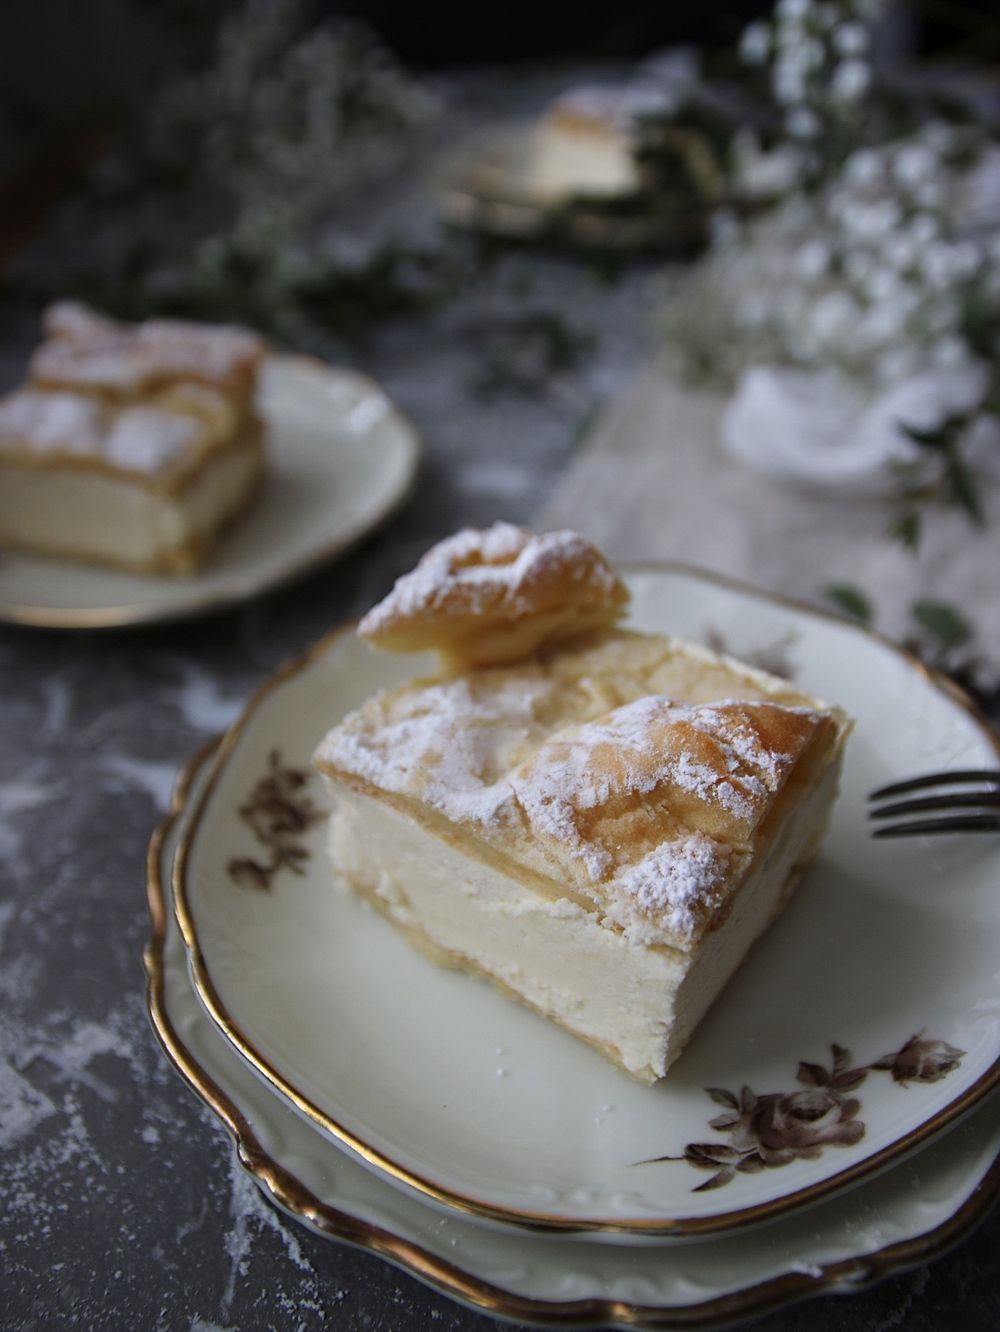 Godaste vaniljrutorna i långpanna - Karpatka2